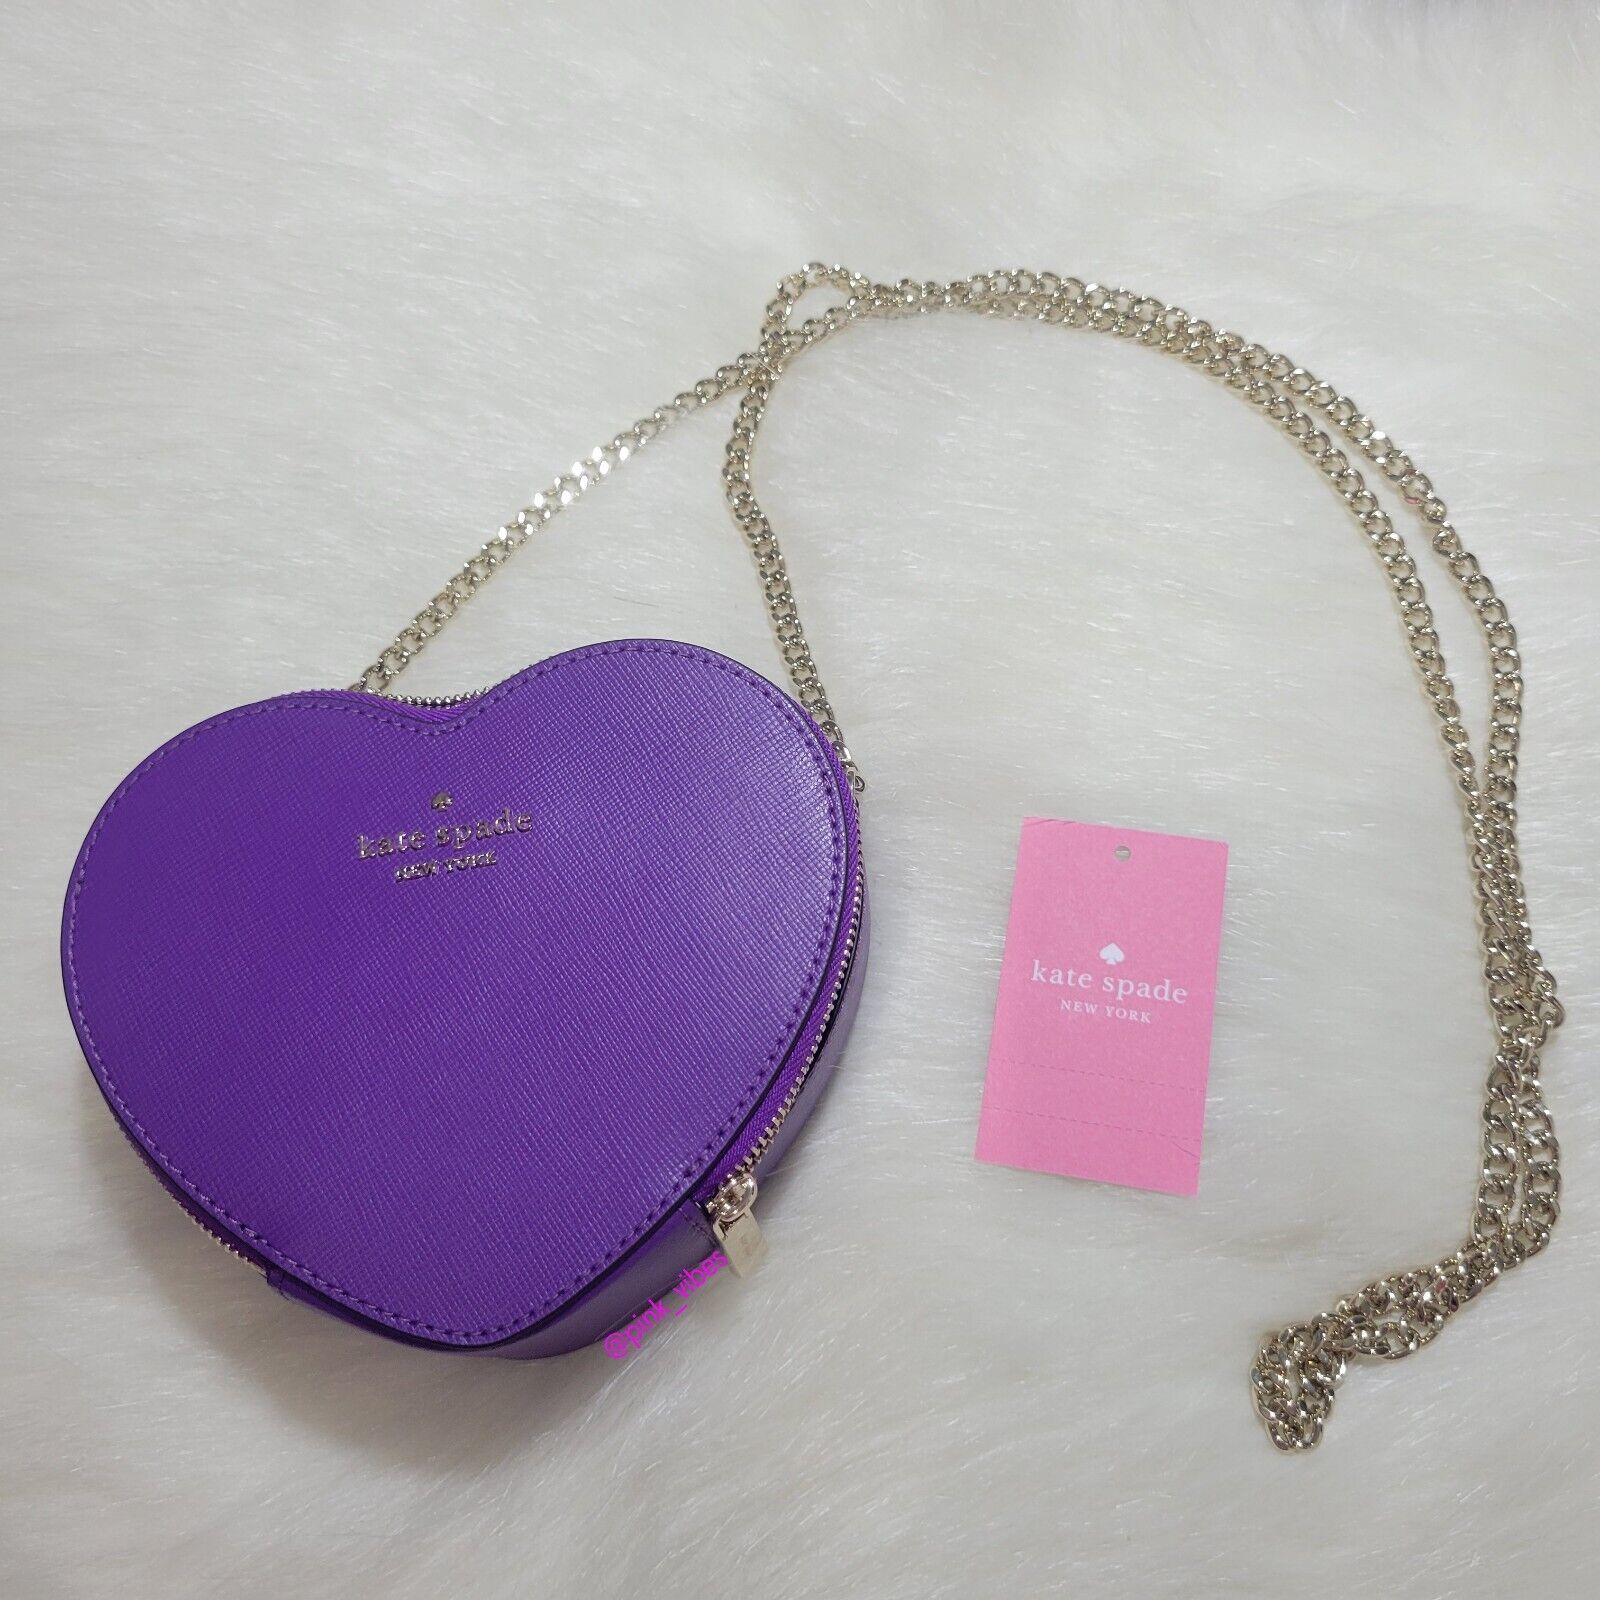 NWT Kate Spade New York Purple Mini Love Shack Heart Crossbody Purse $259